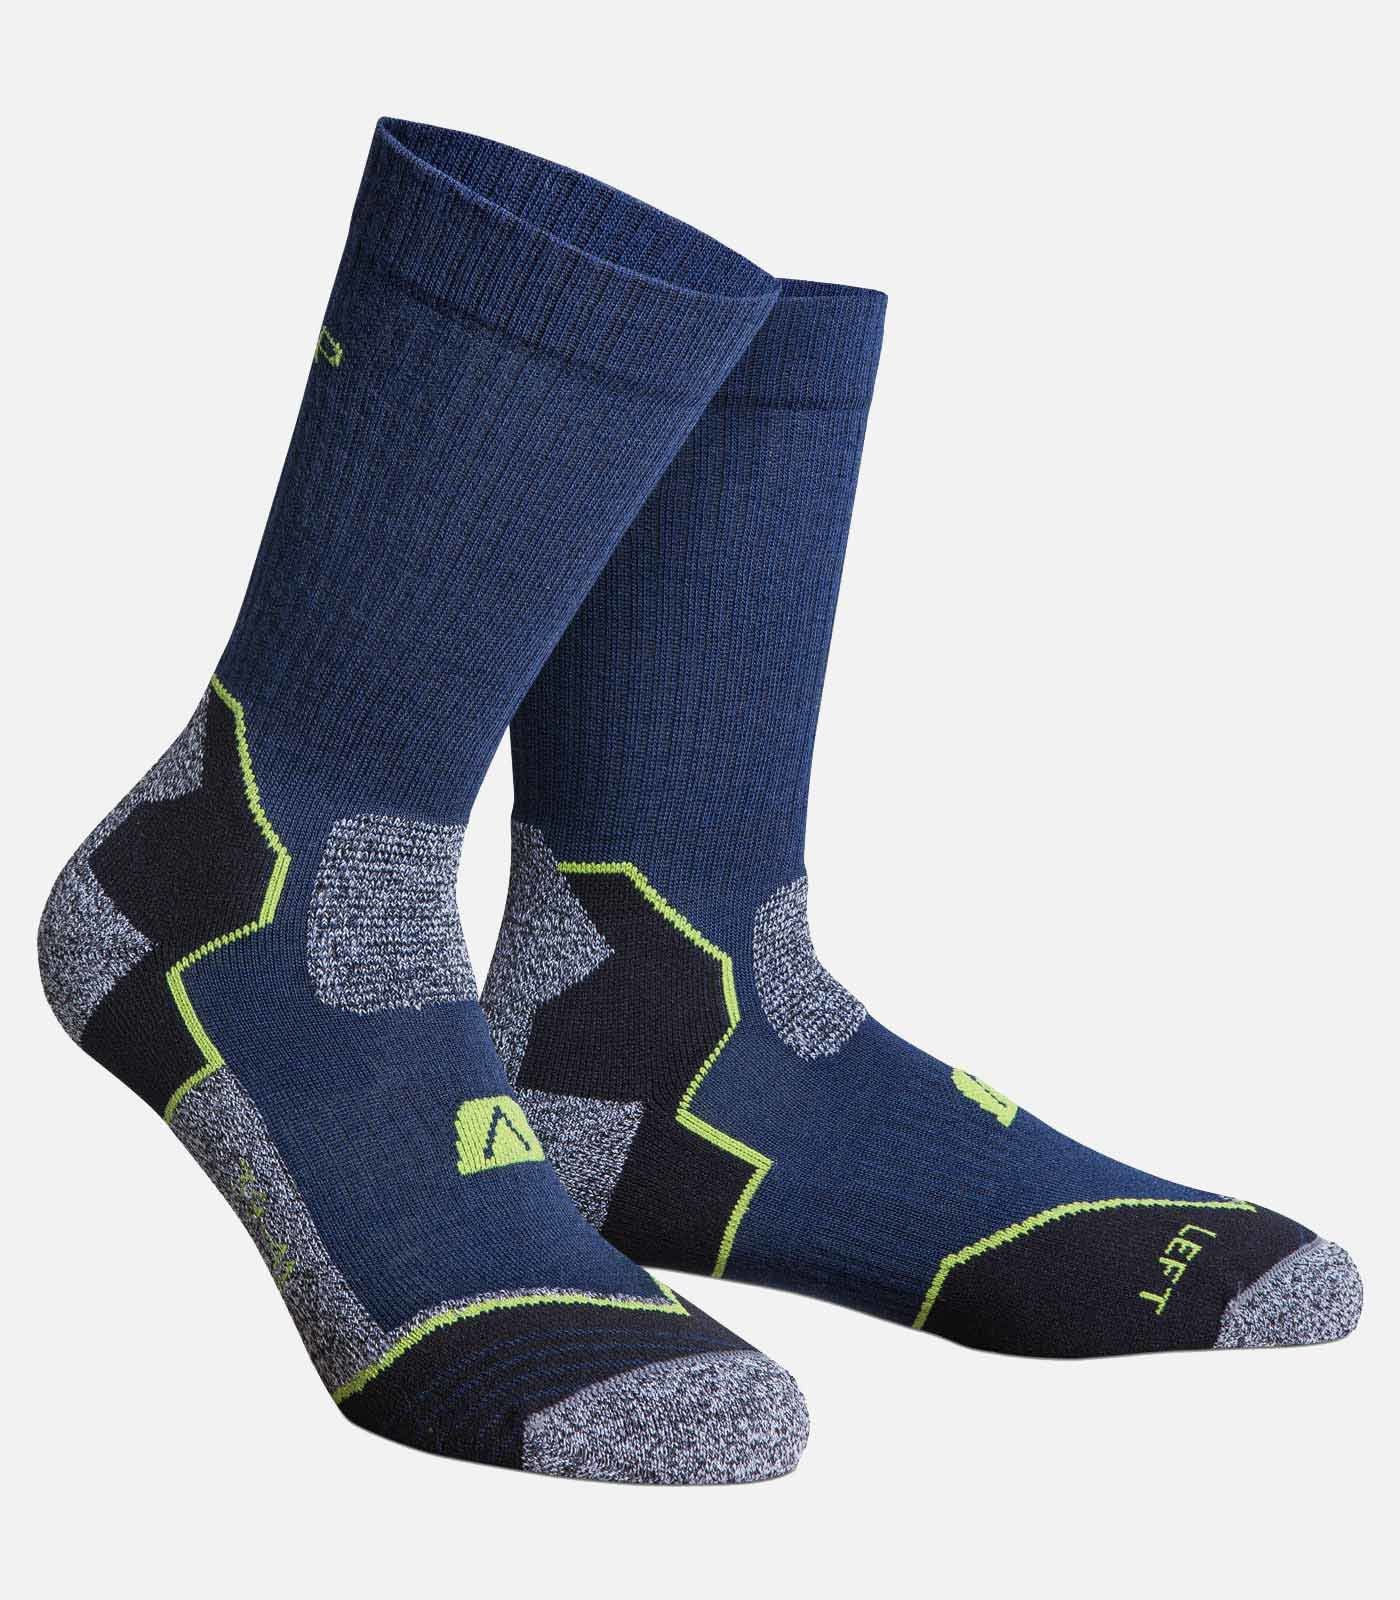 High-performance hiking socks